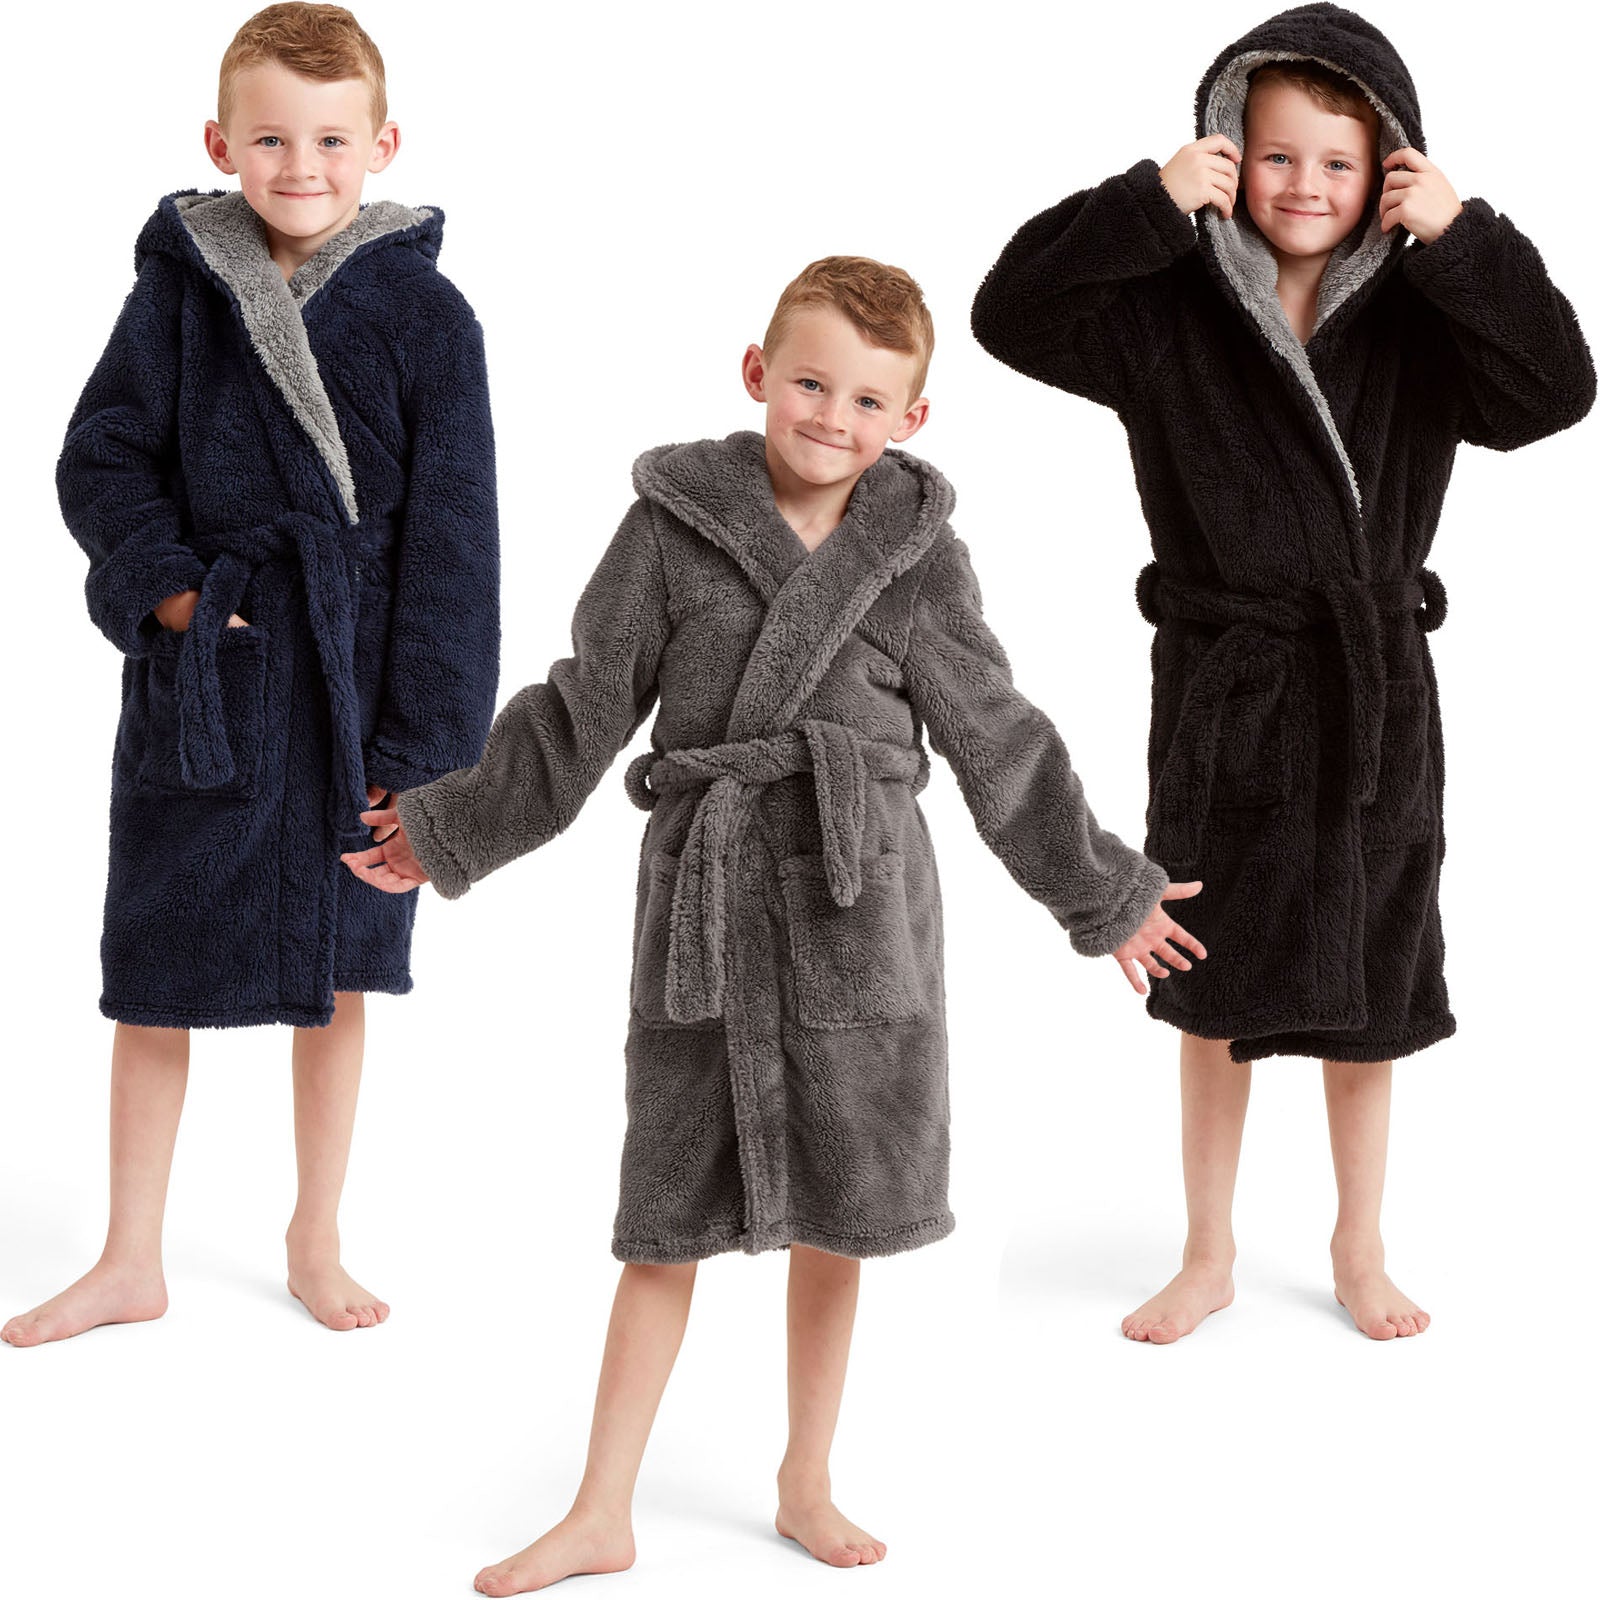 Boys Dressing Gowns Starting from £7.99 | Pyjamas.com